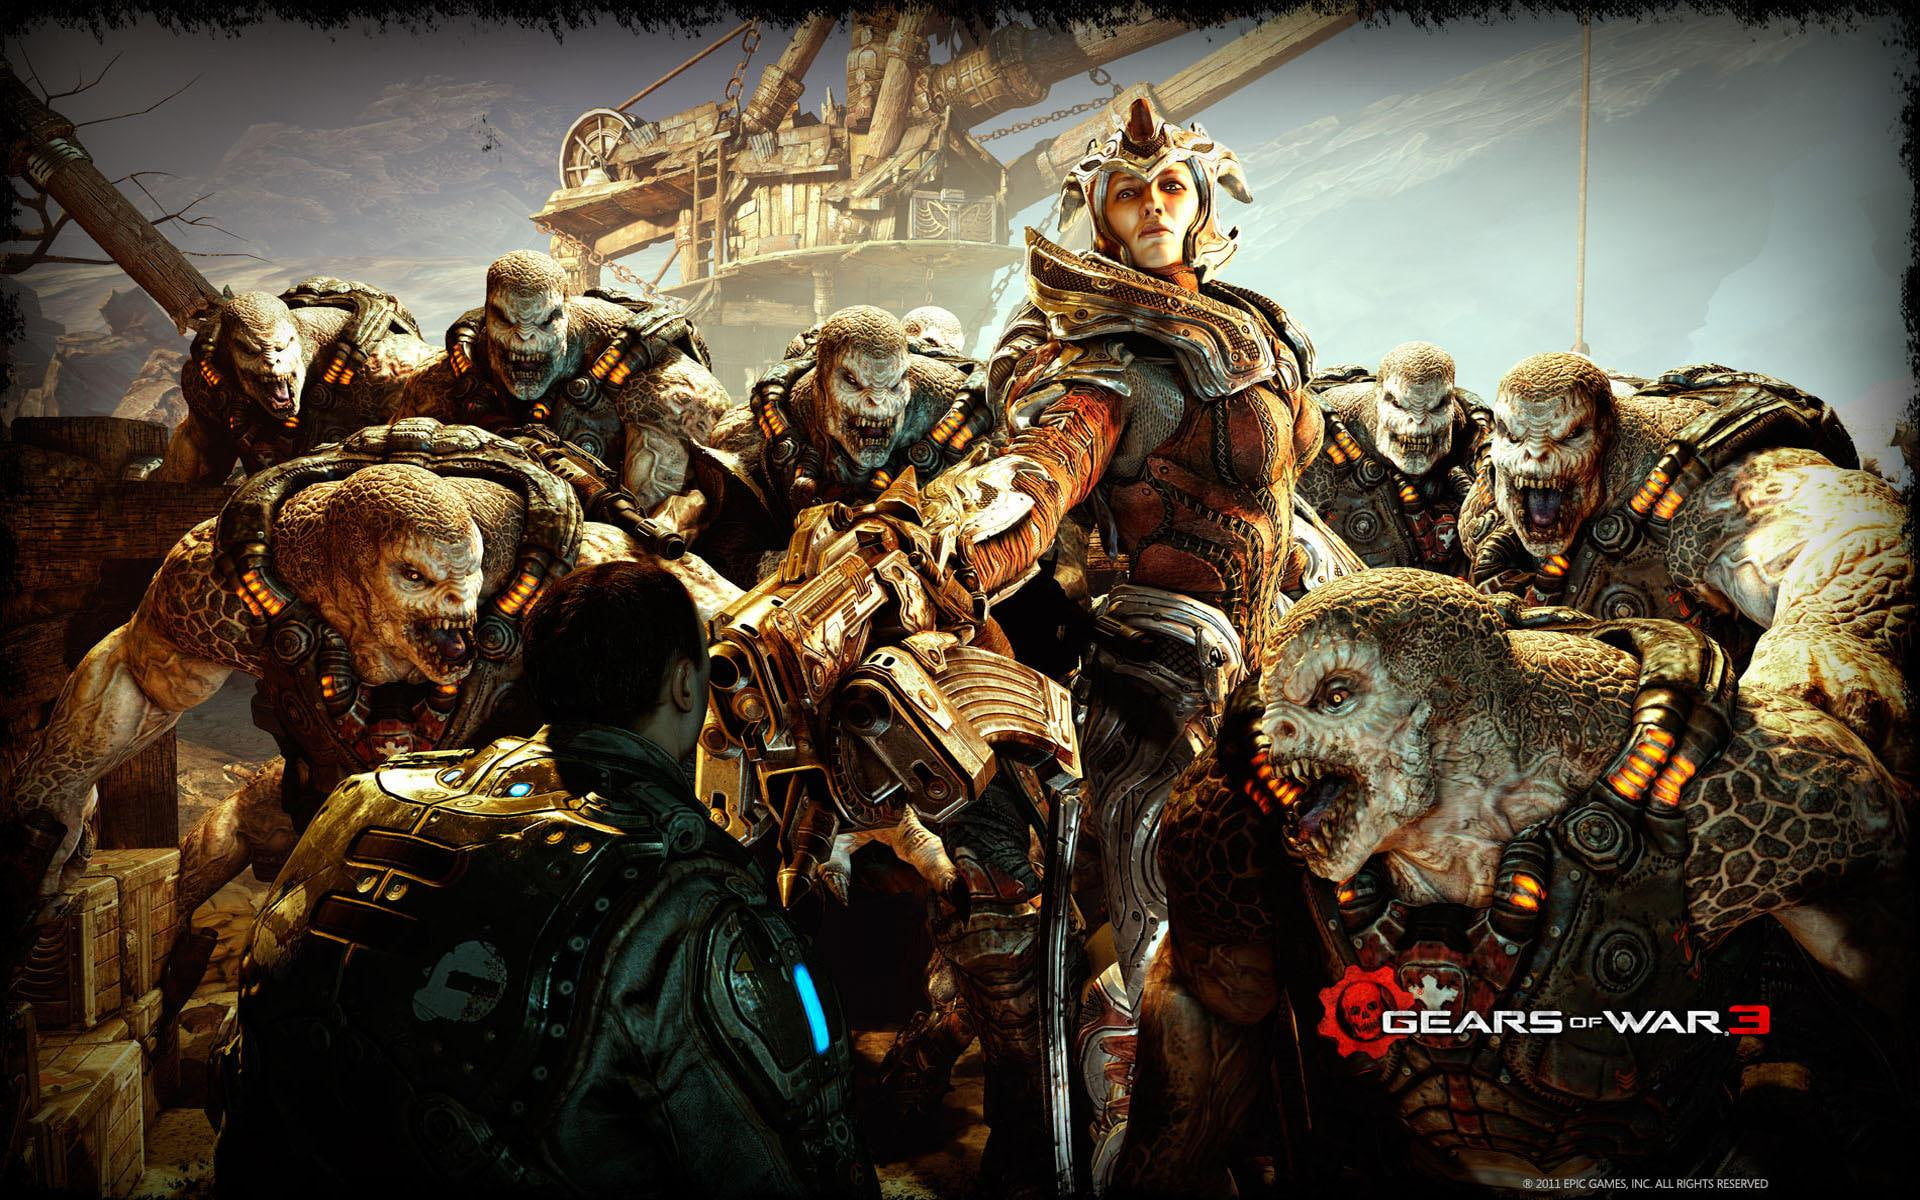 Gears of War 3 2011, gear of wars poster, games